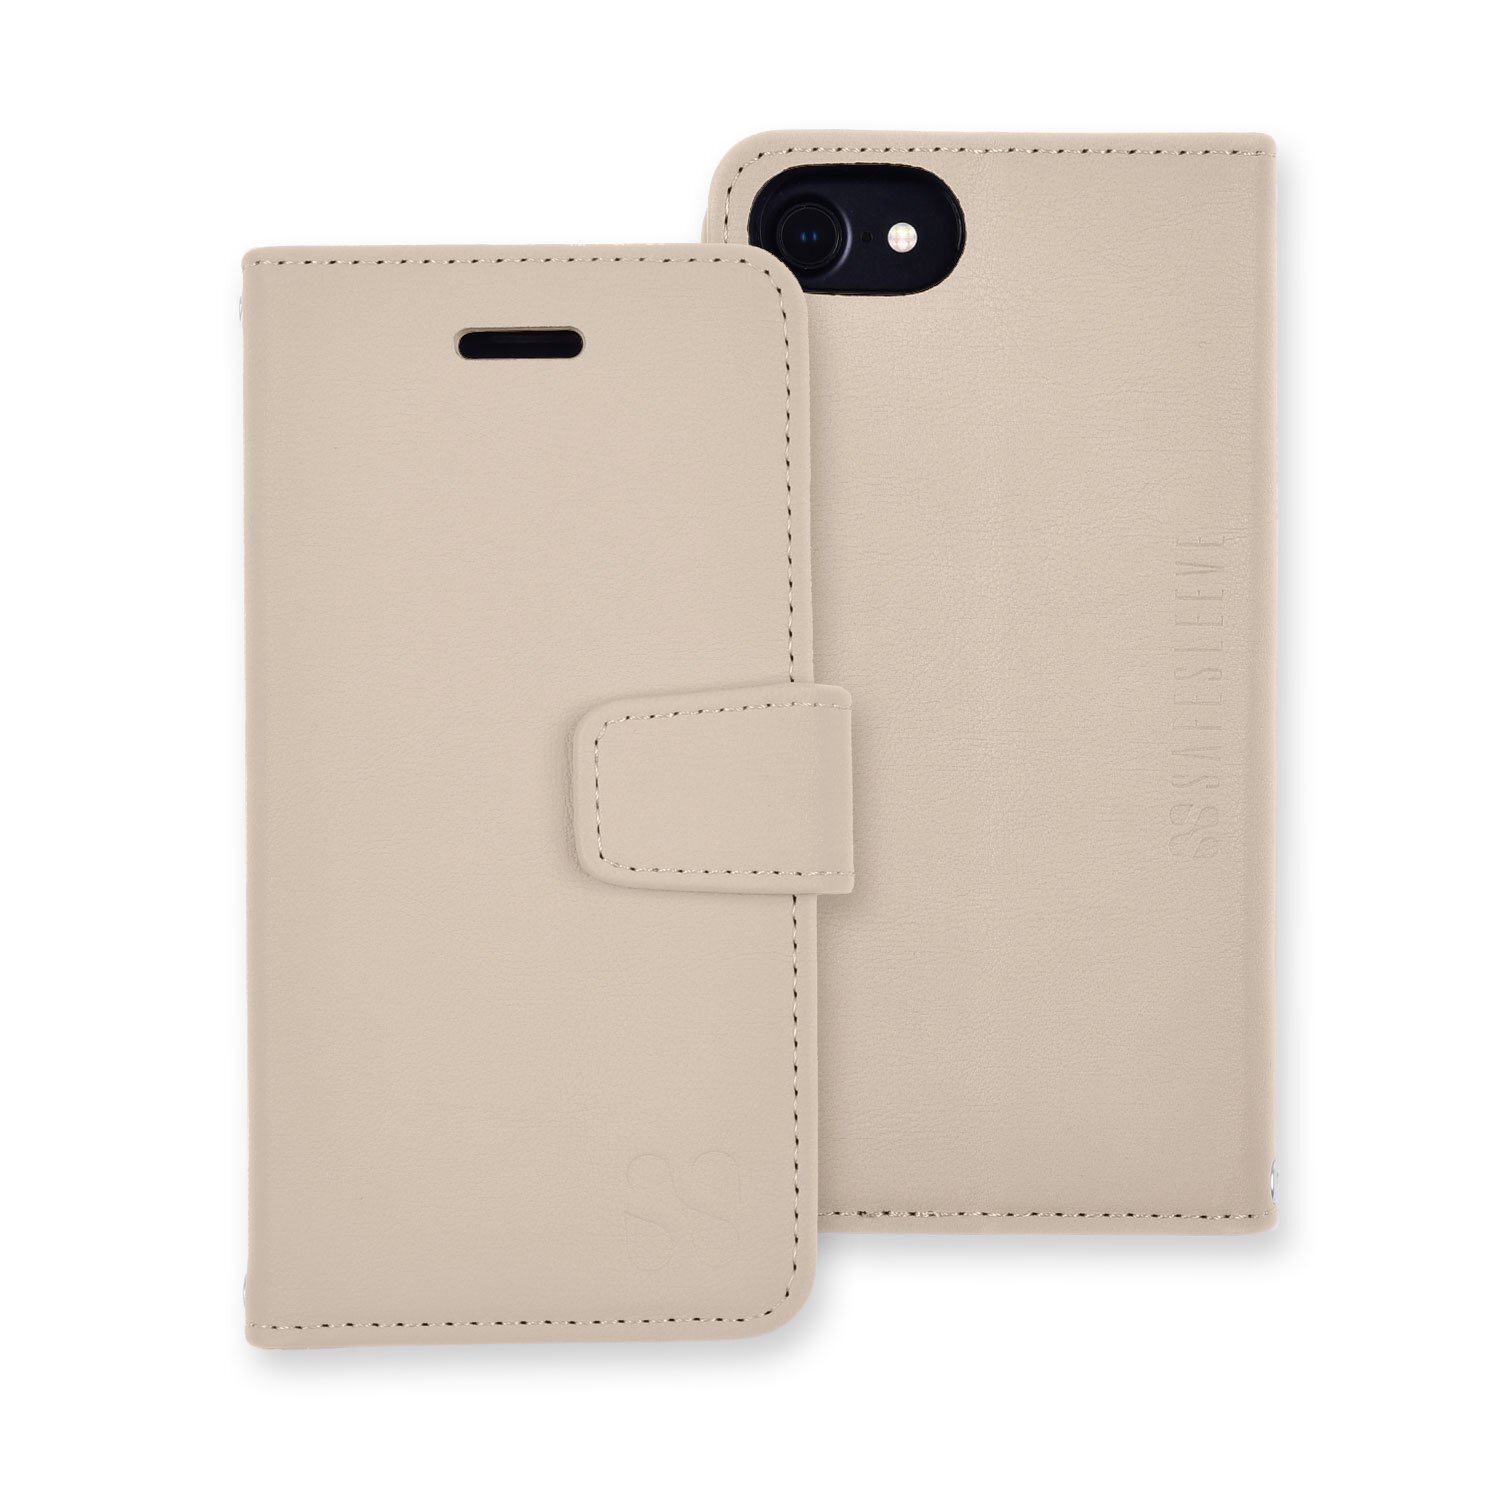 SafeSleeve Detachable for iPhone 6, 6s, 7 & 8 Plus